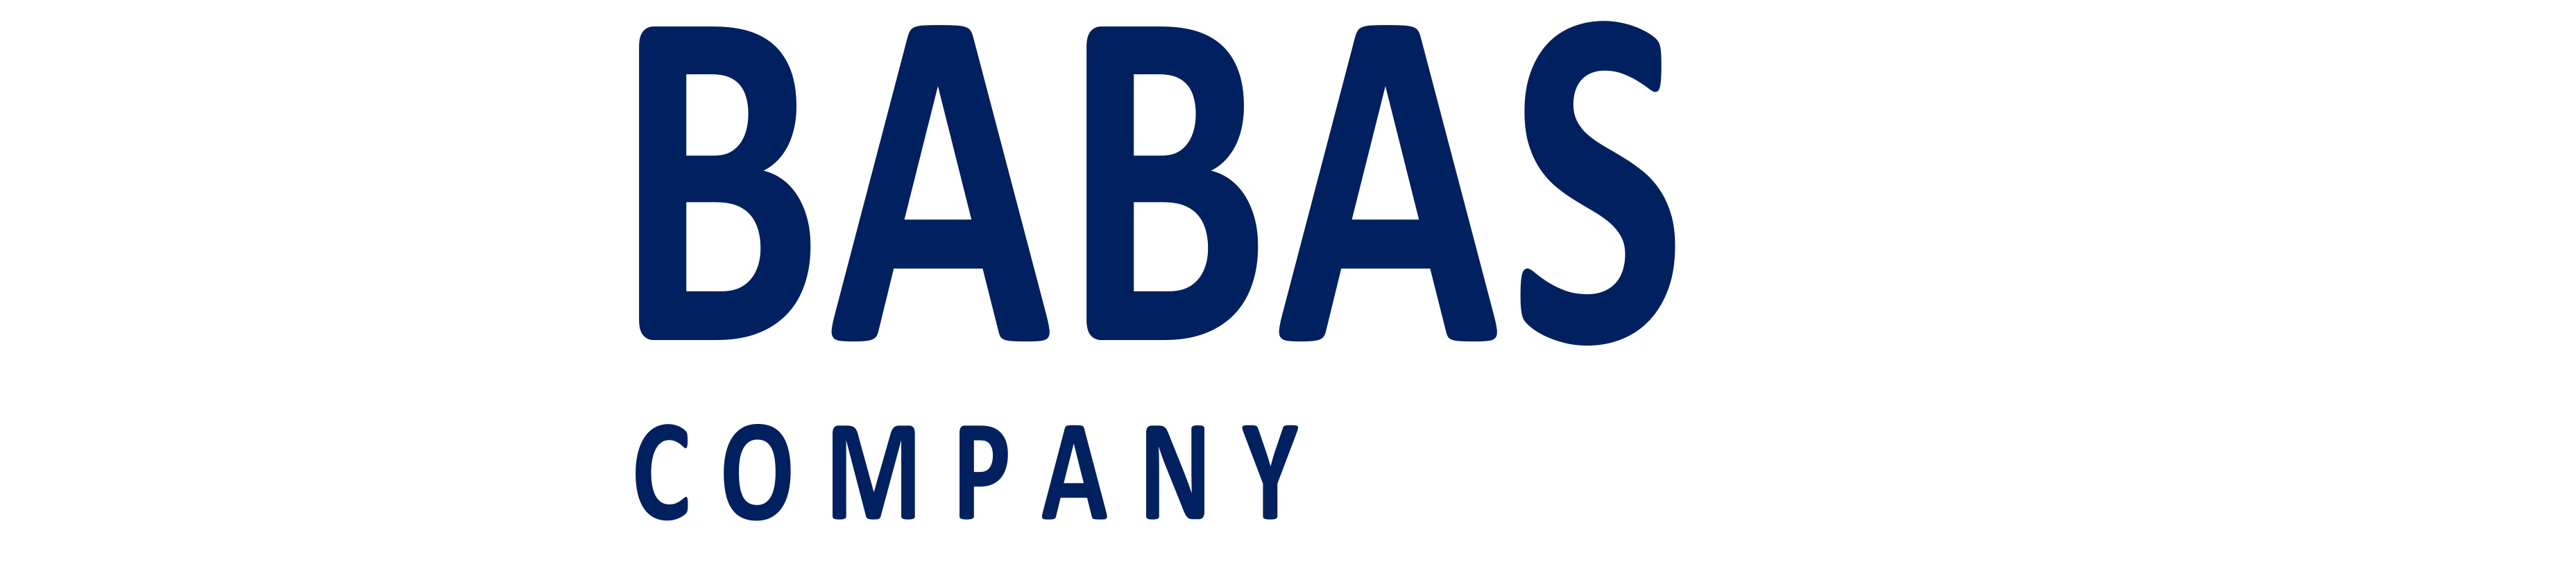 Babas Company